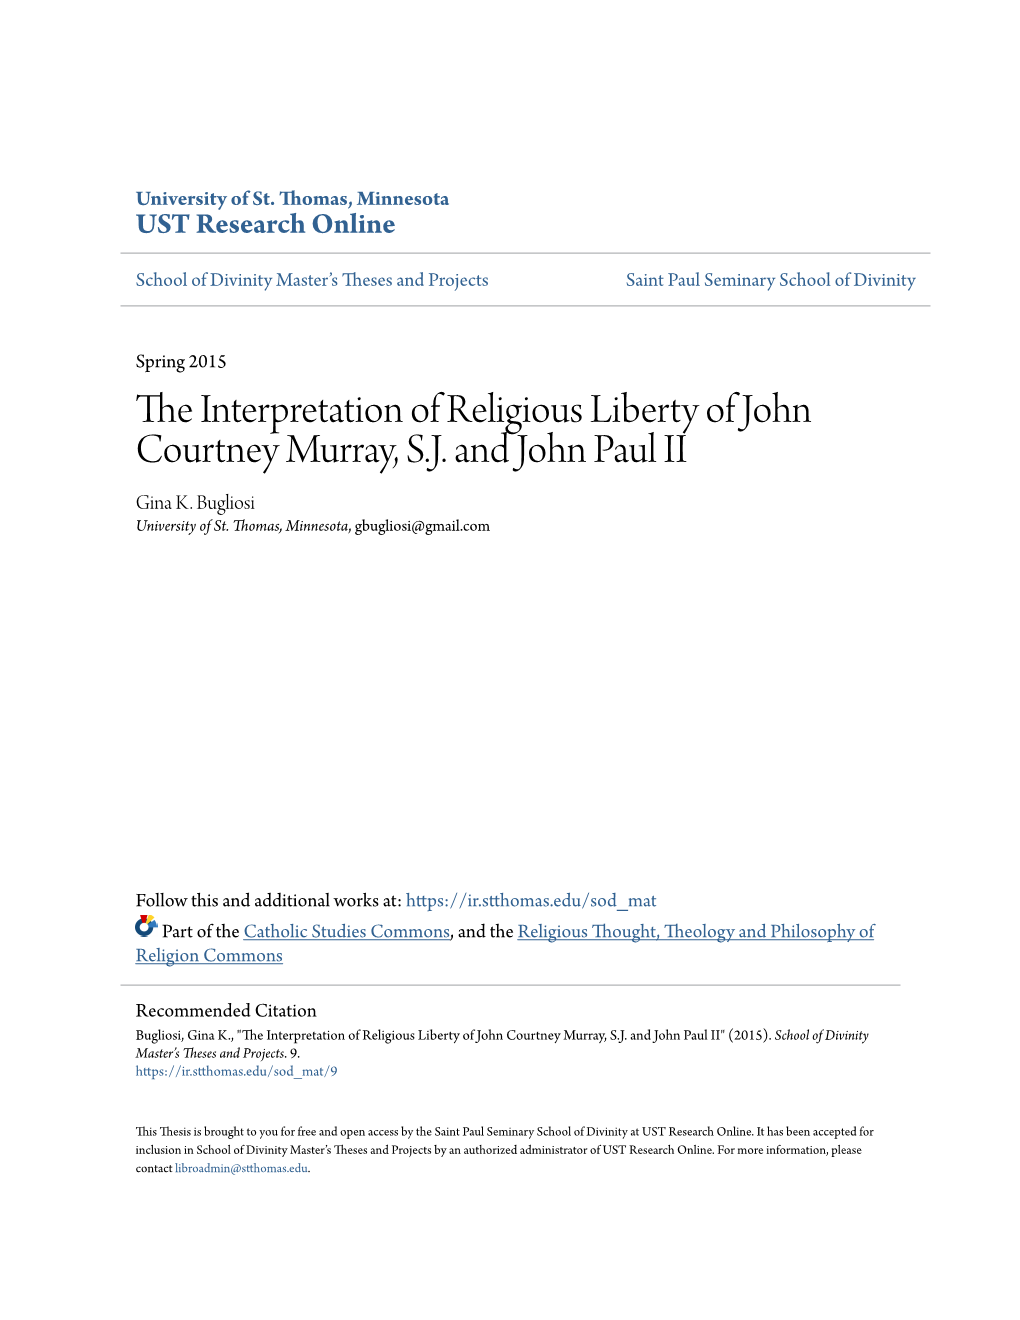 The Interpretation of Religious Liberty of John Courtney Murray, S.J. and John Paul II